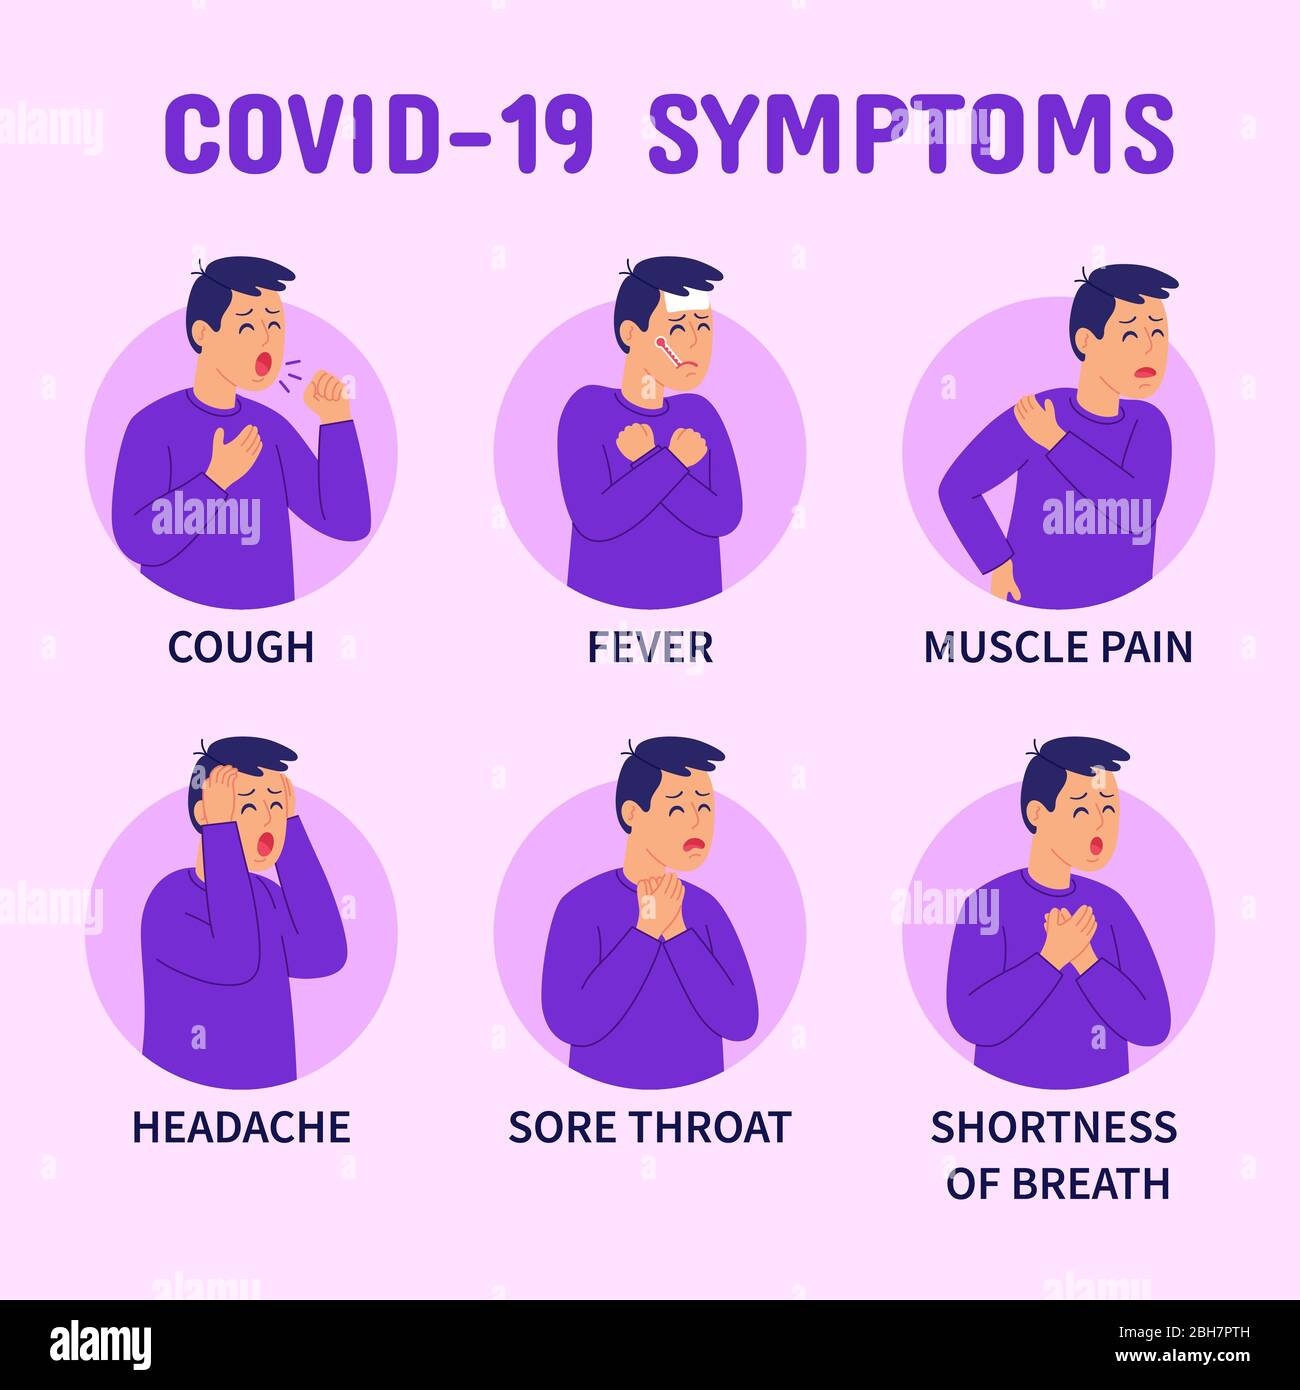 Coronavirus COVID-19 Symptoms infographics. Symptoms : Cough, Fever, Muscle Pain, Headache, Sore throat, Shortness of Breath. Stock Vector